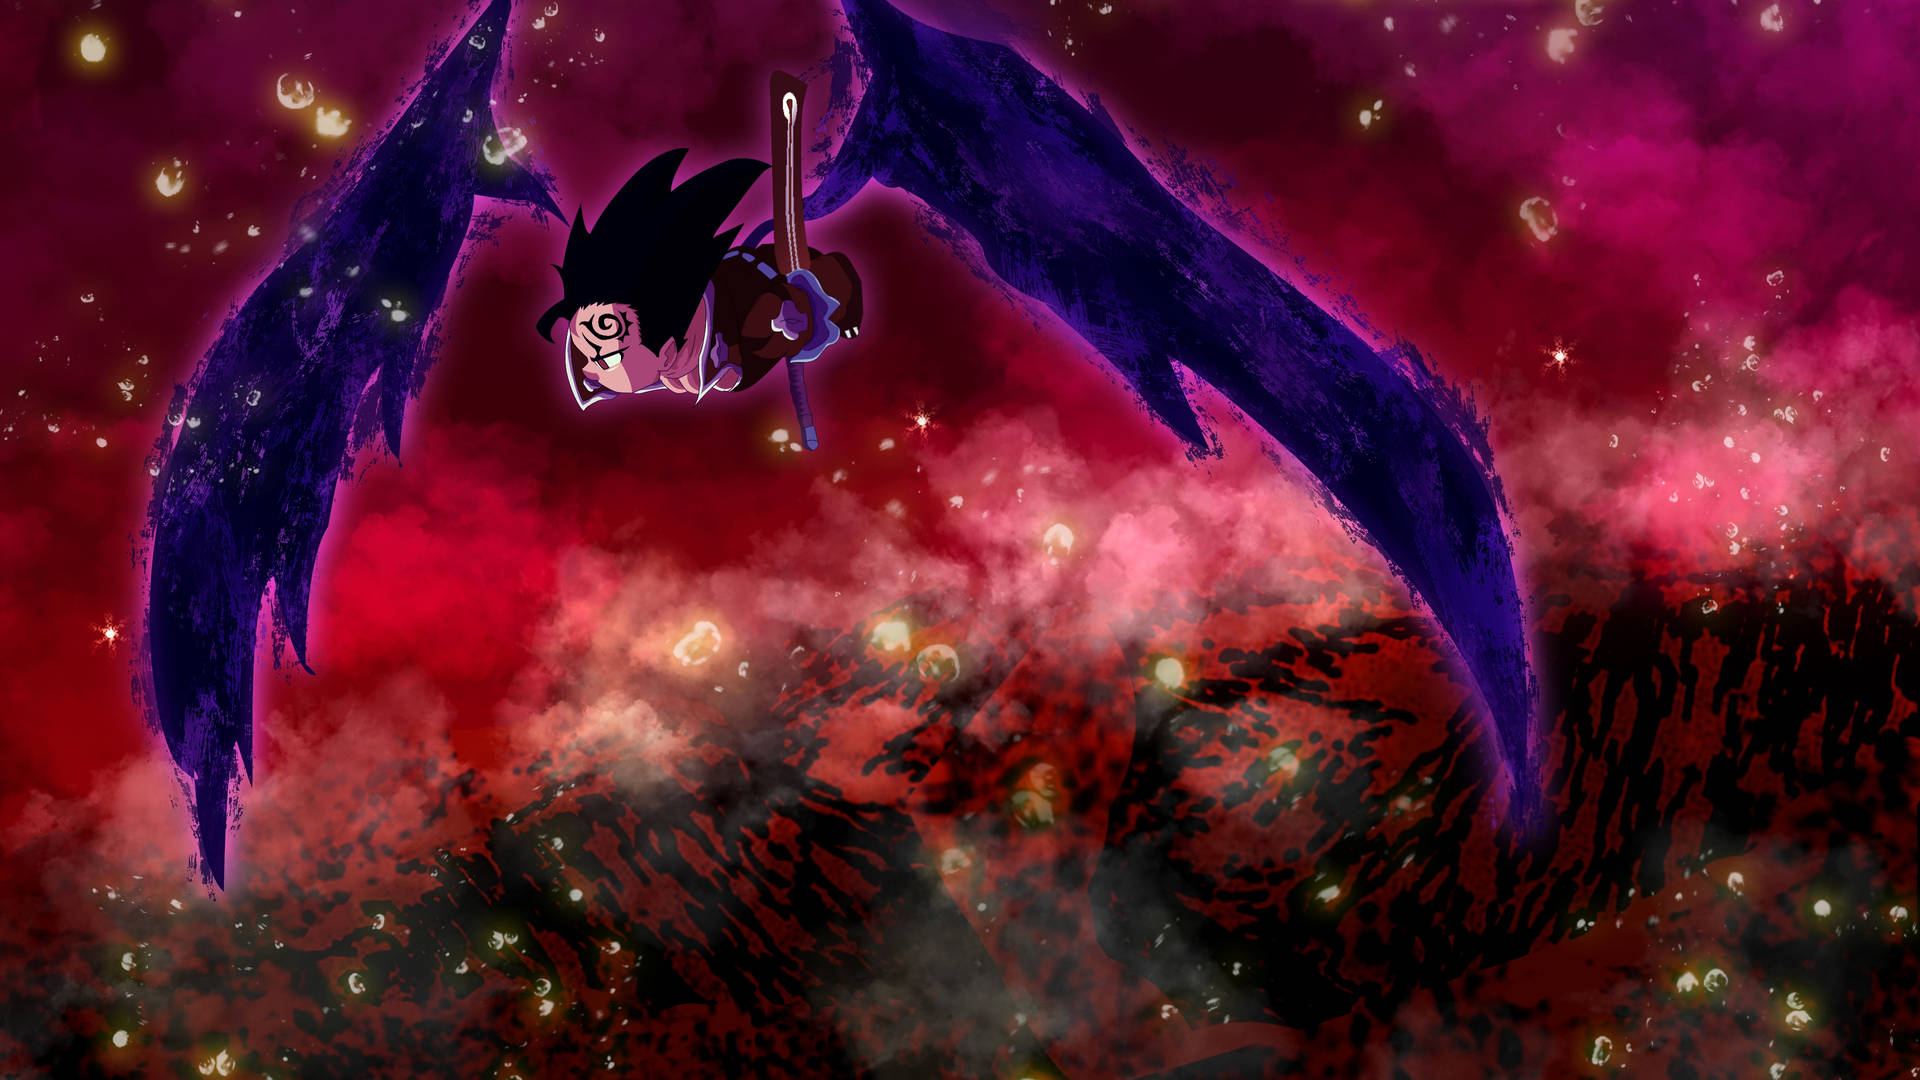 Zeldris Darkness Power Wings Background